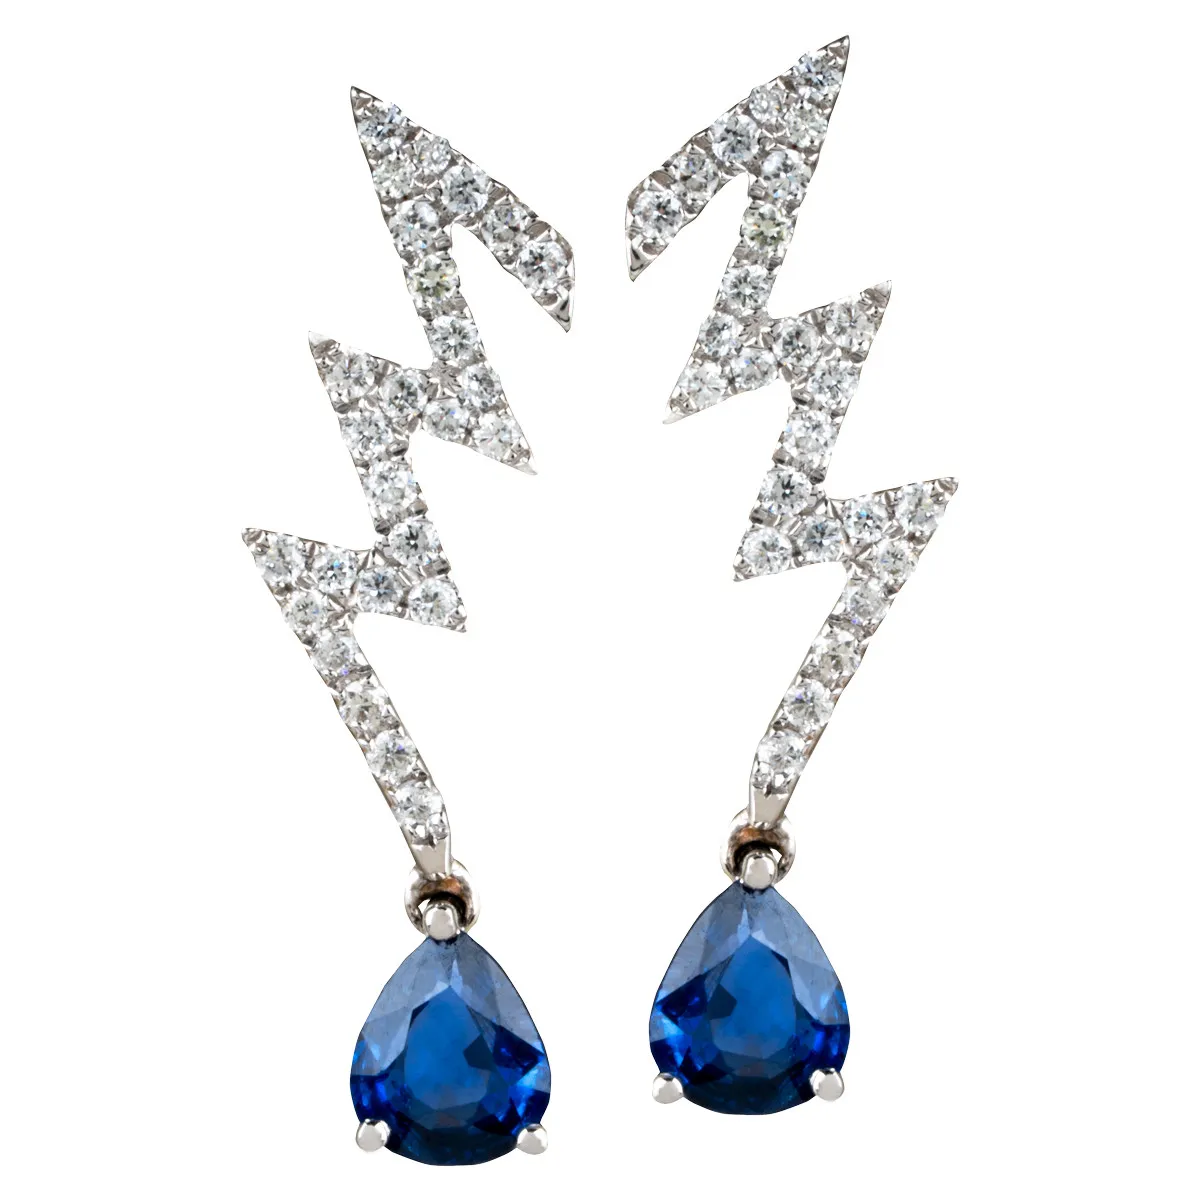 White gold lightning bolt drop earrings set with blue sapphires.